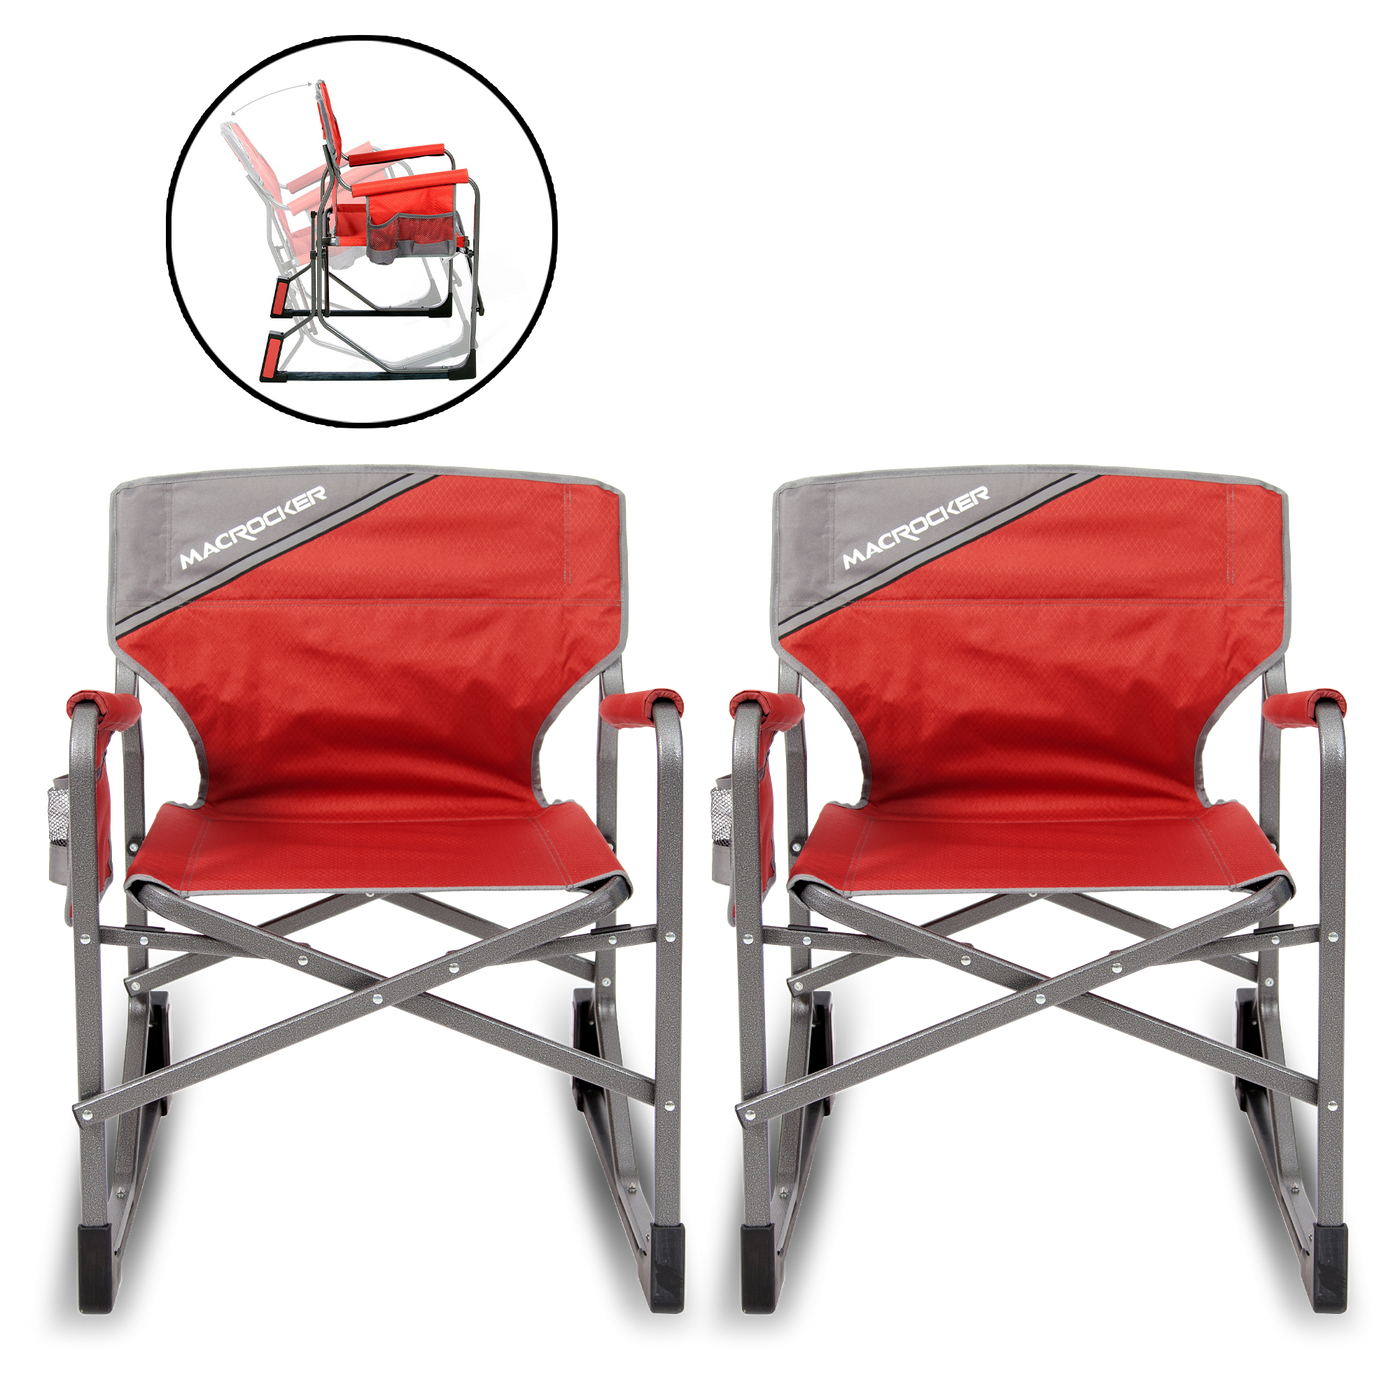 MacRocker Outdoor Rocking Chair- 2 Pack